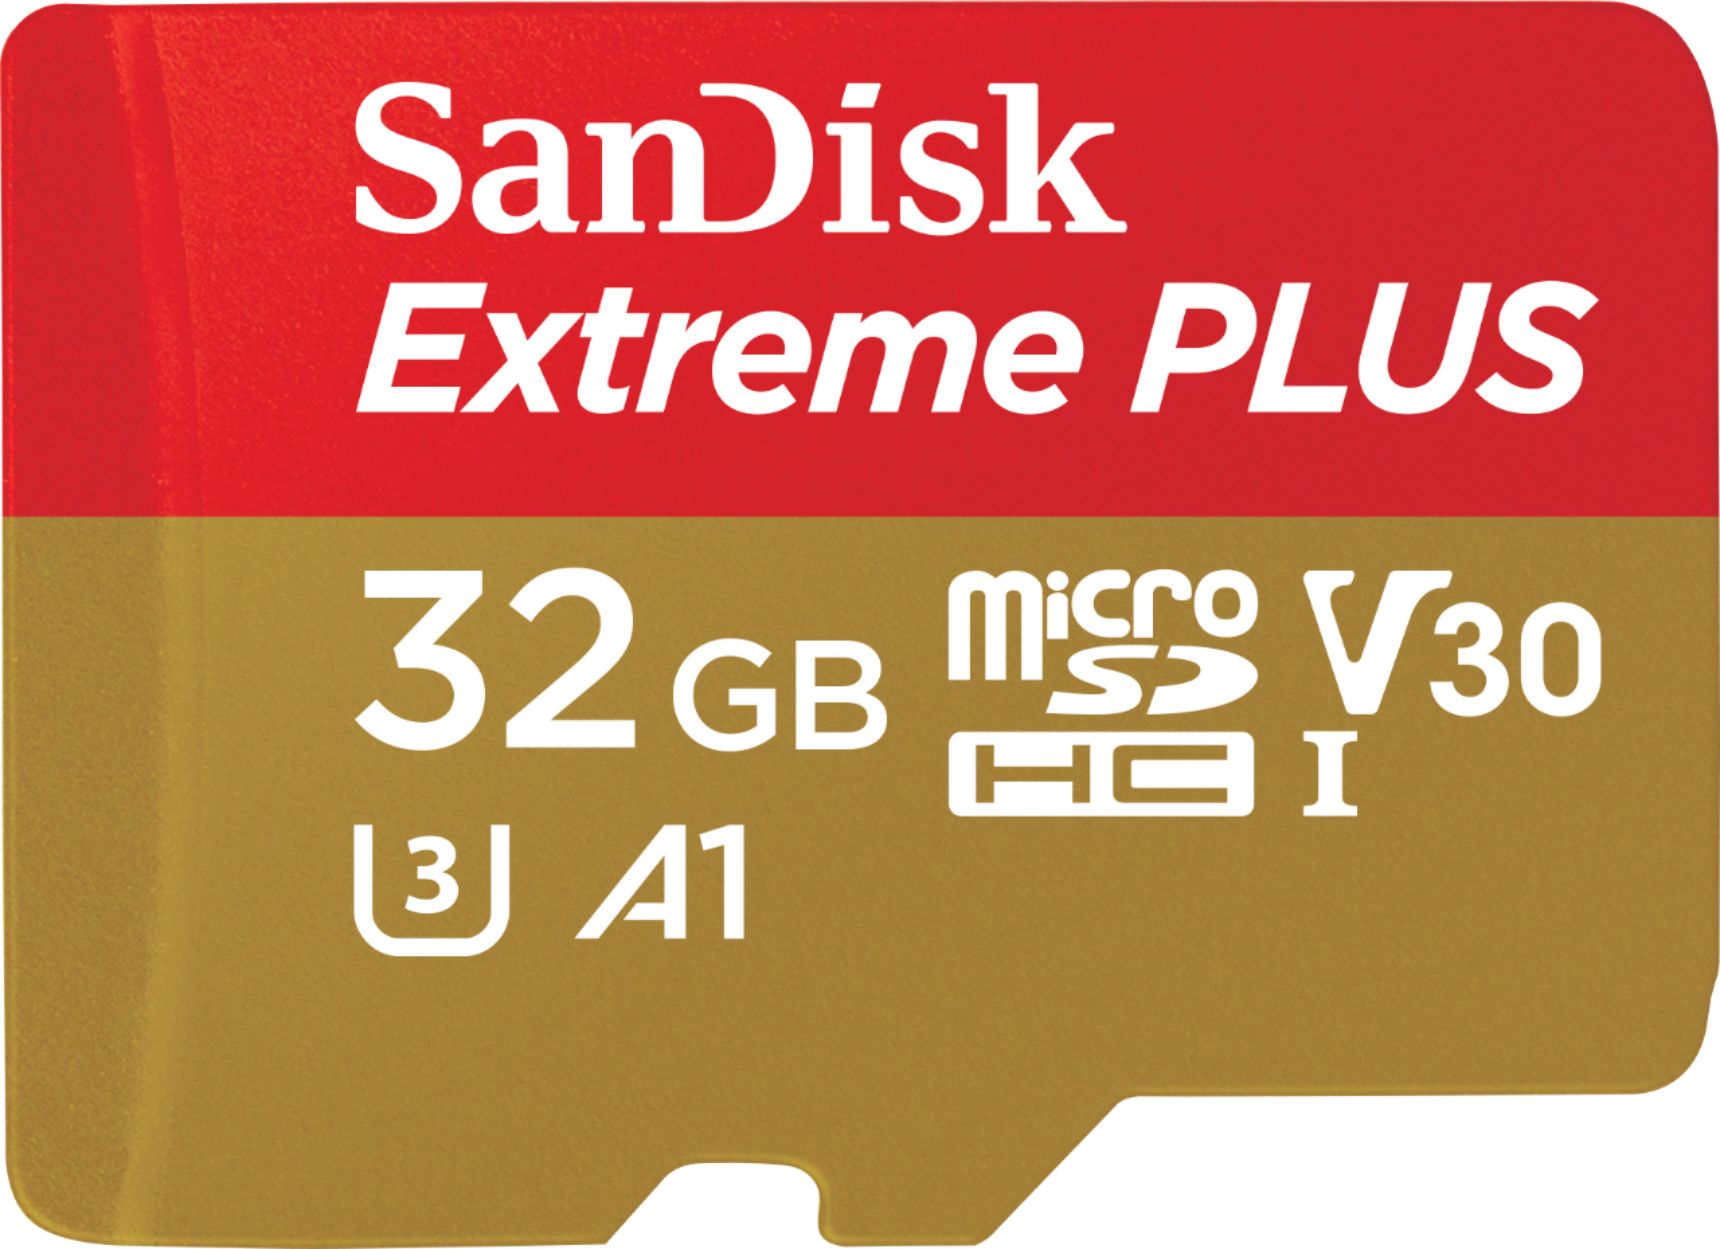 Sandisk Extreme Plus 32gb Microsdhc Uhs I Memory Card Sdsqxsg 032g Ancma Best Buy